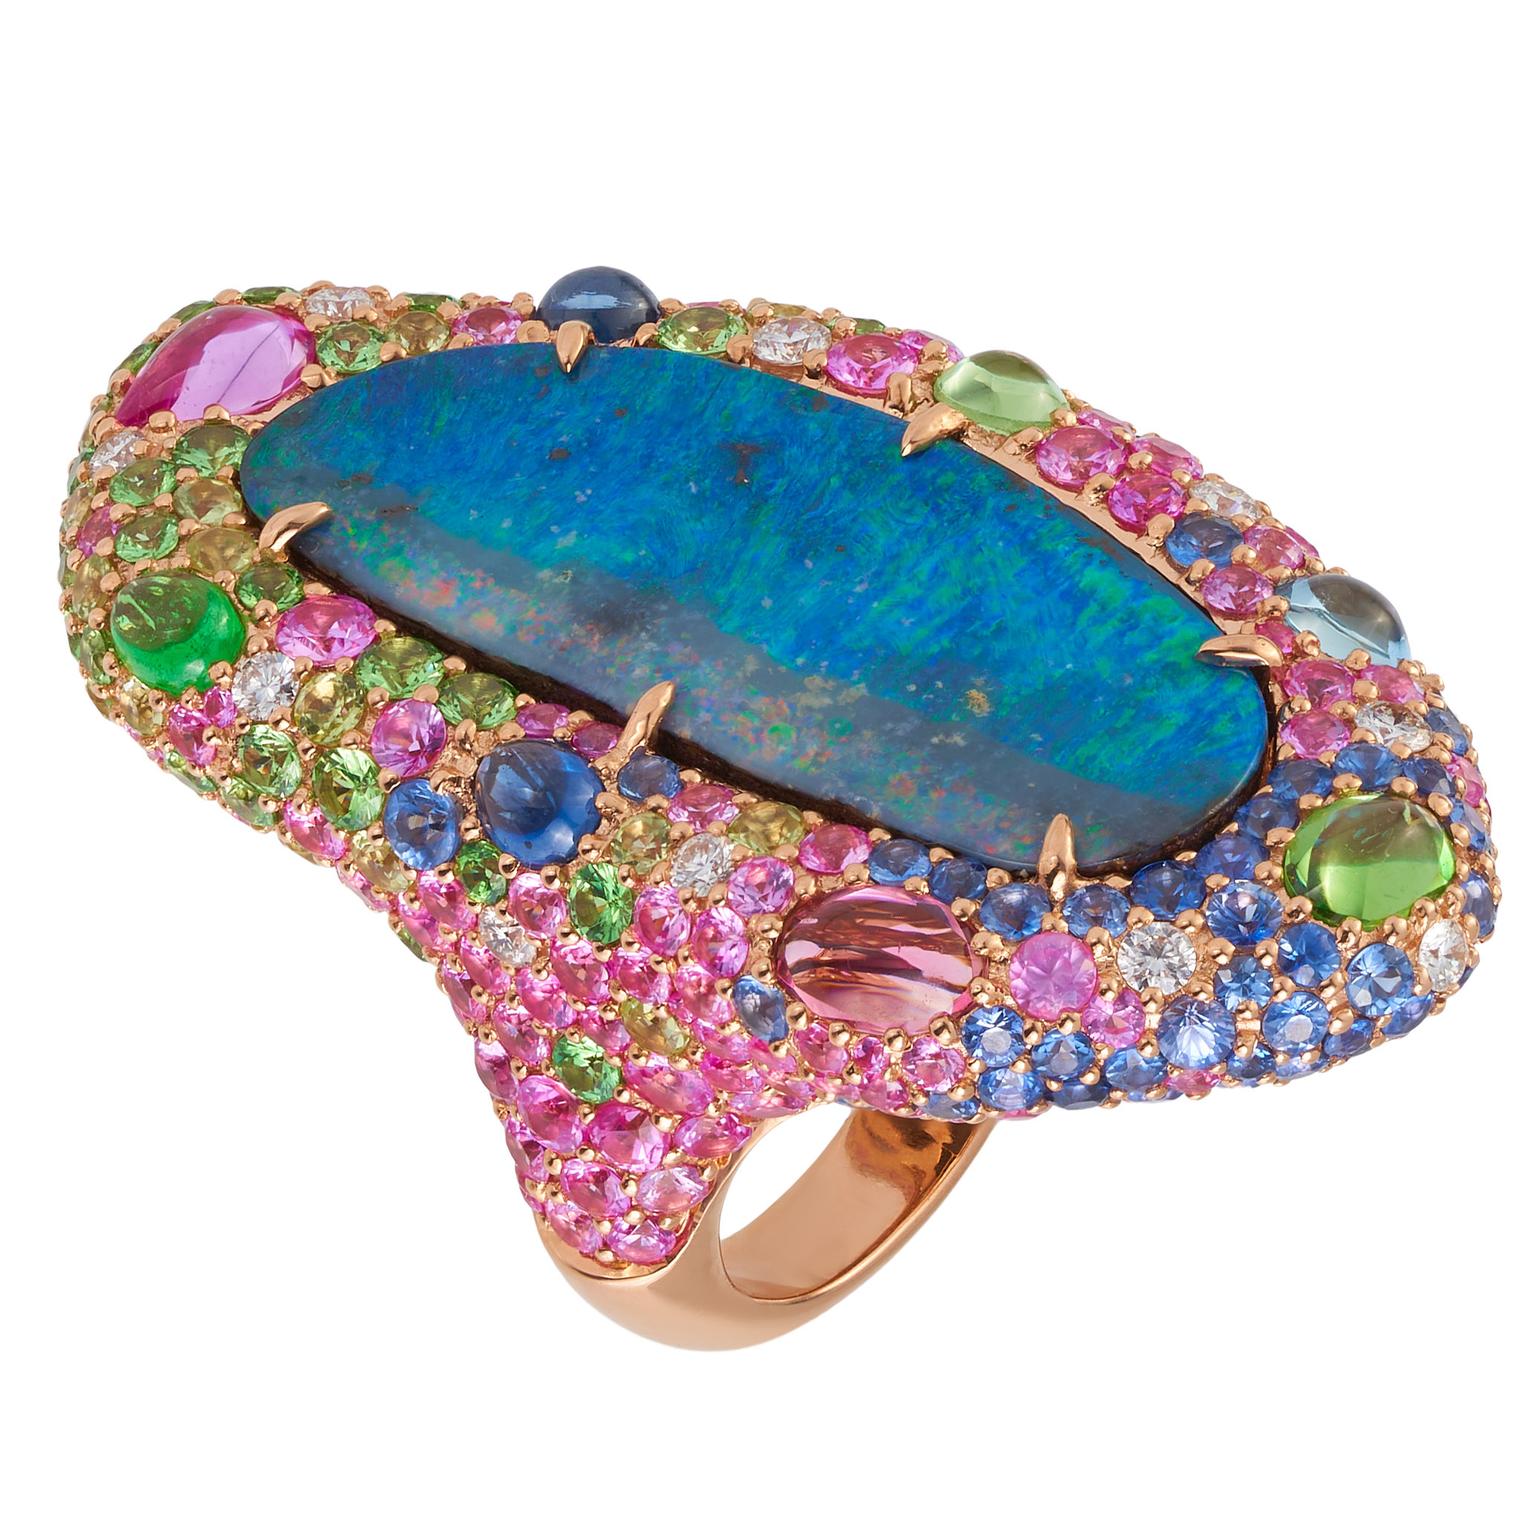 Opal ring from Margot McKinney